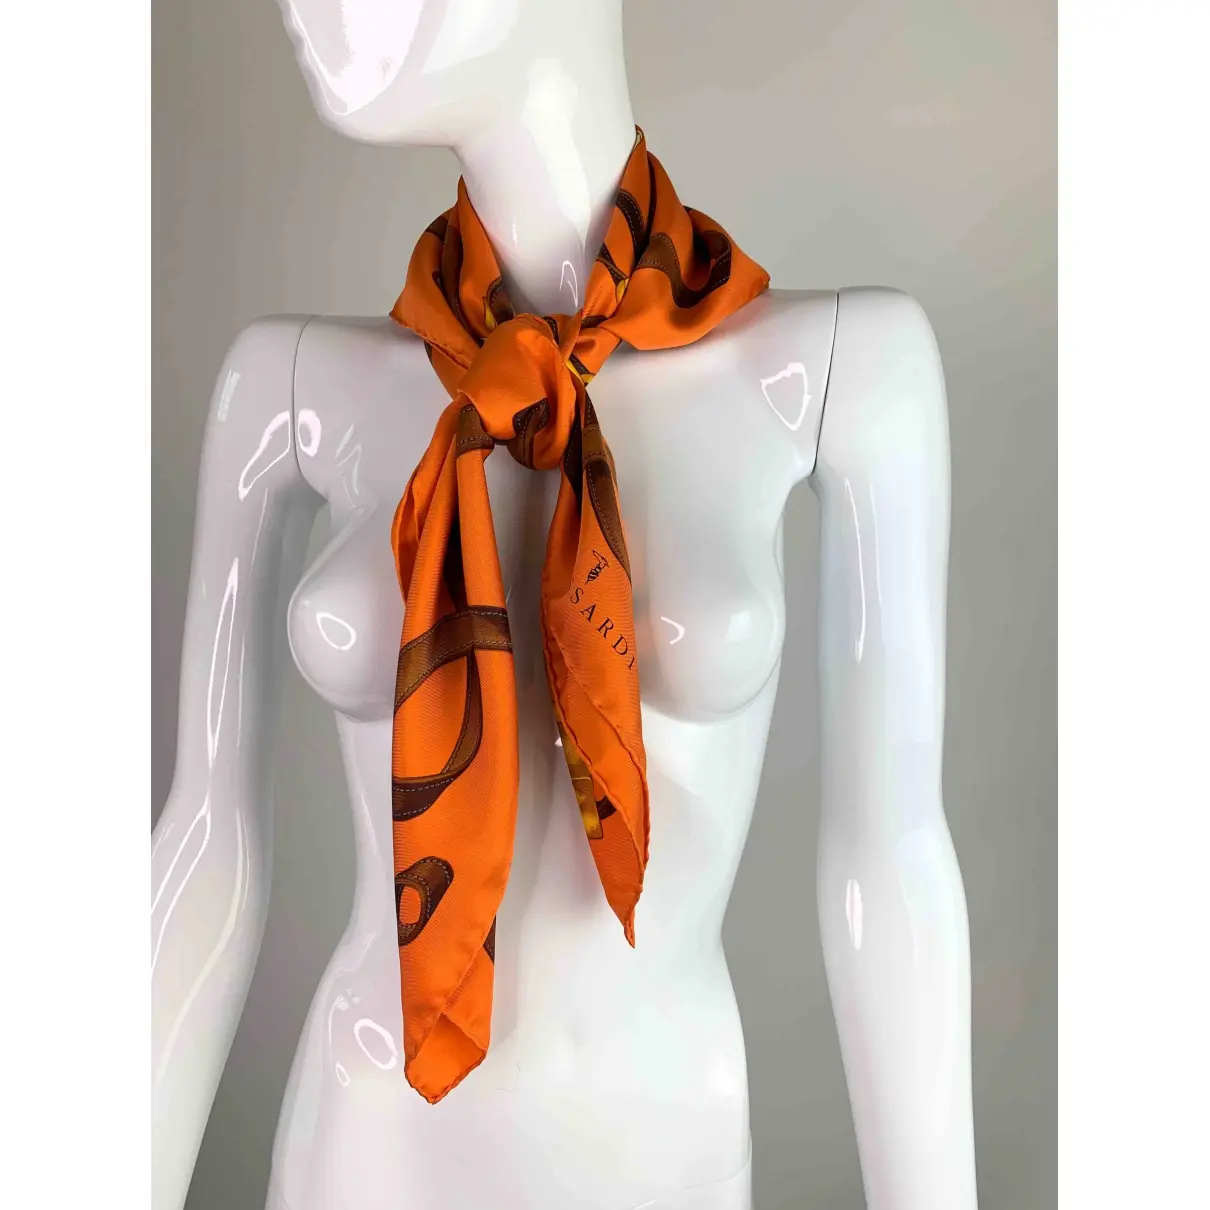 Trussardi Silk scarf for sale